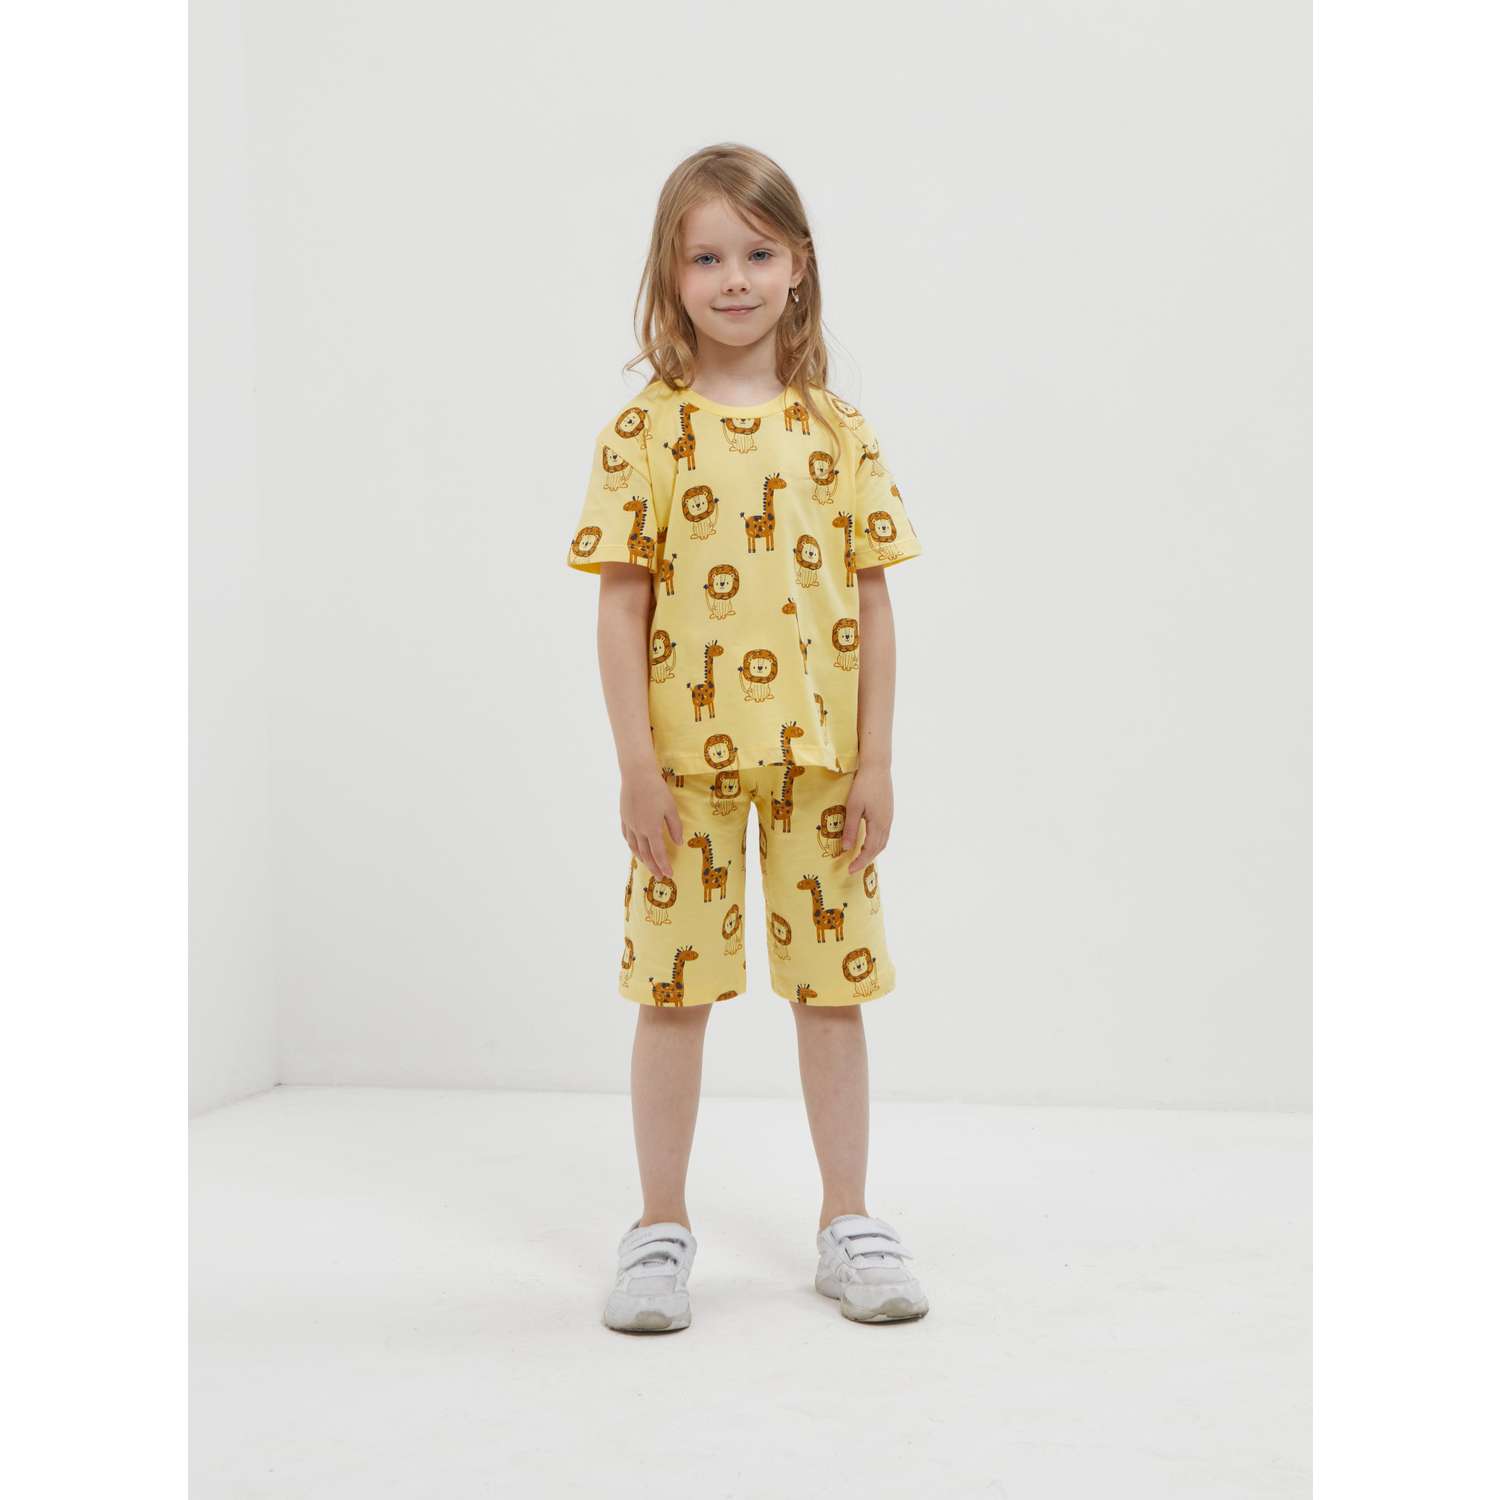 Пижама ISSHOP пижама желтая с шортами - фото 6